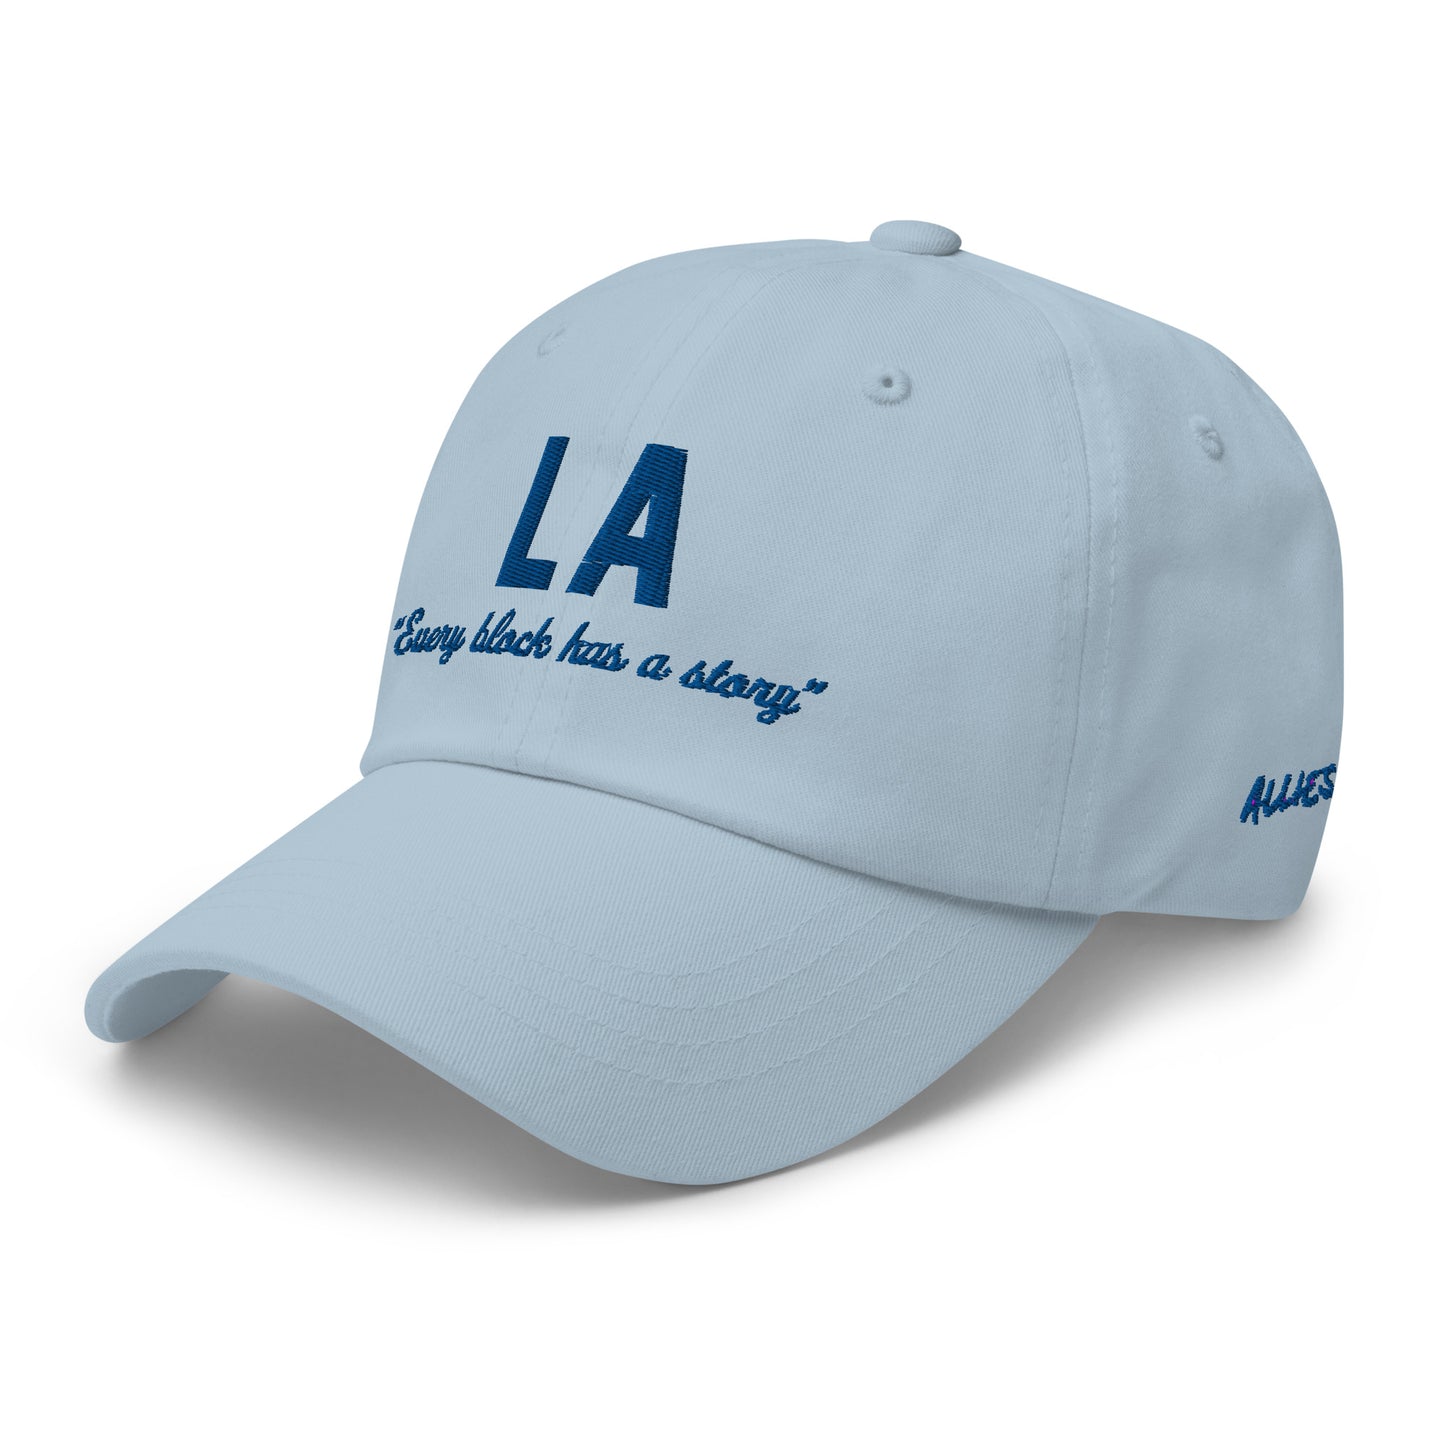 Los Angeles Story Hat